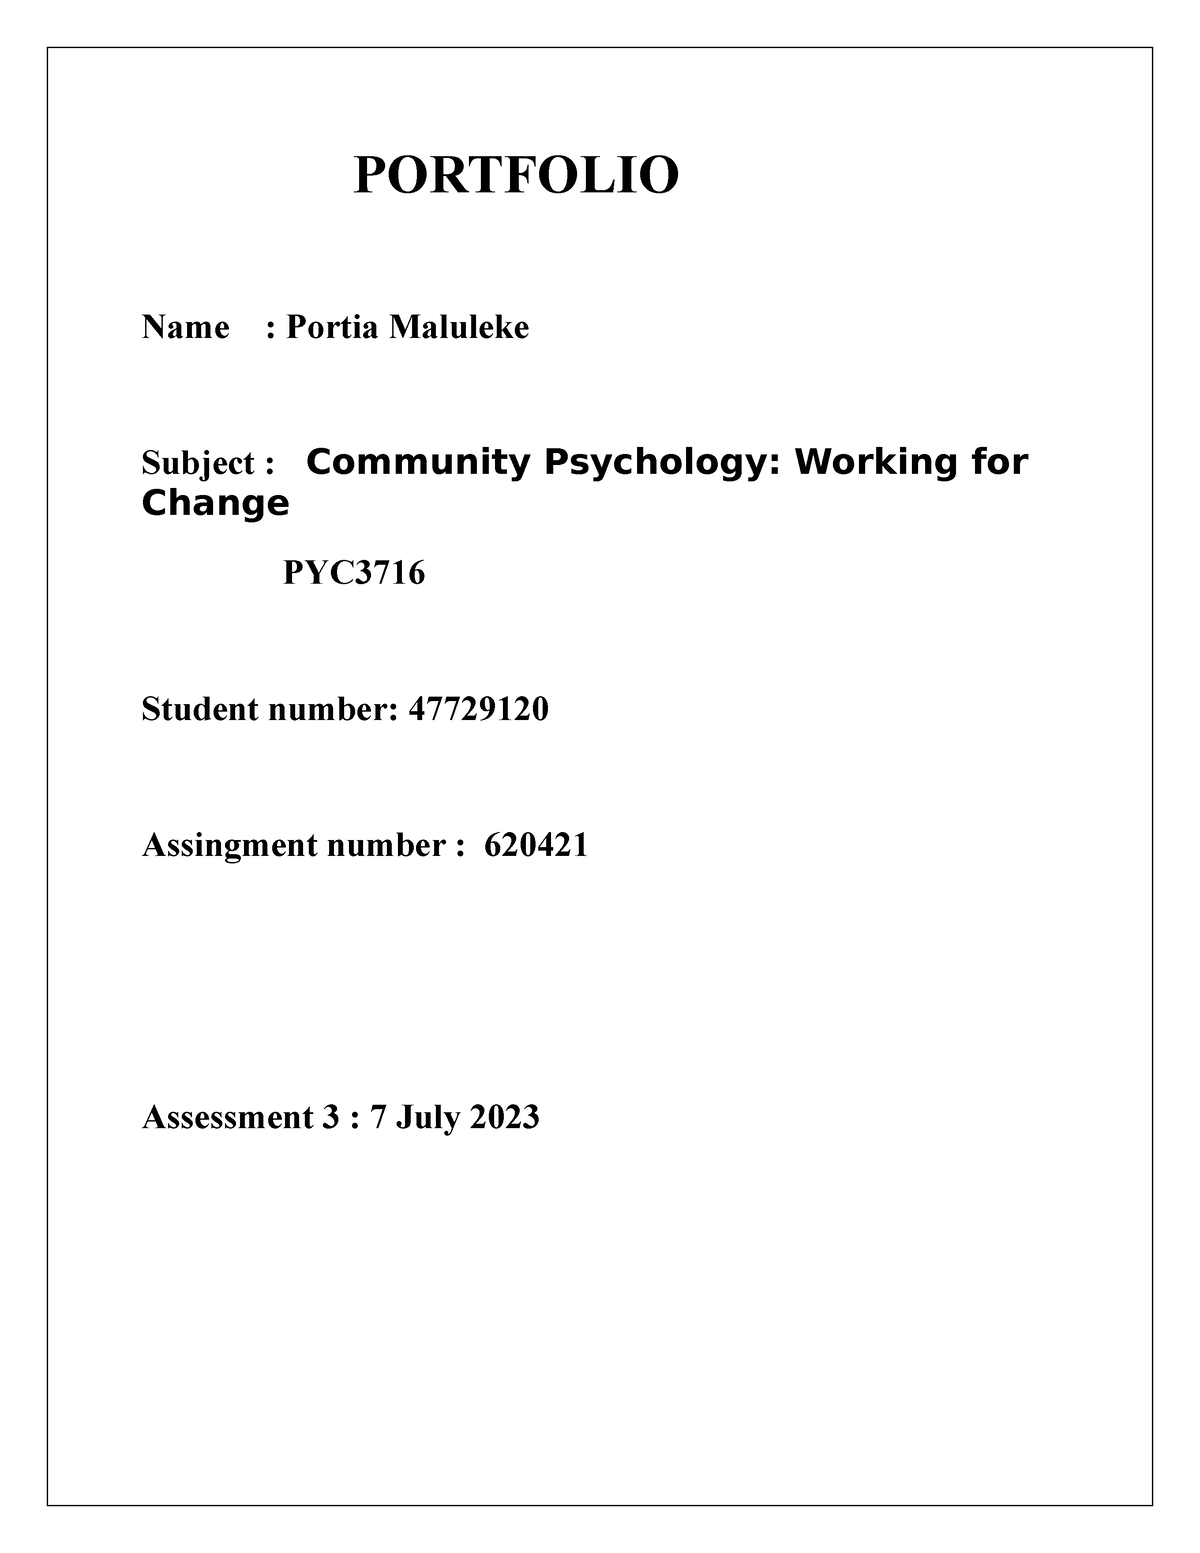 pyc3716 assignment 3 portfolio pdf download